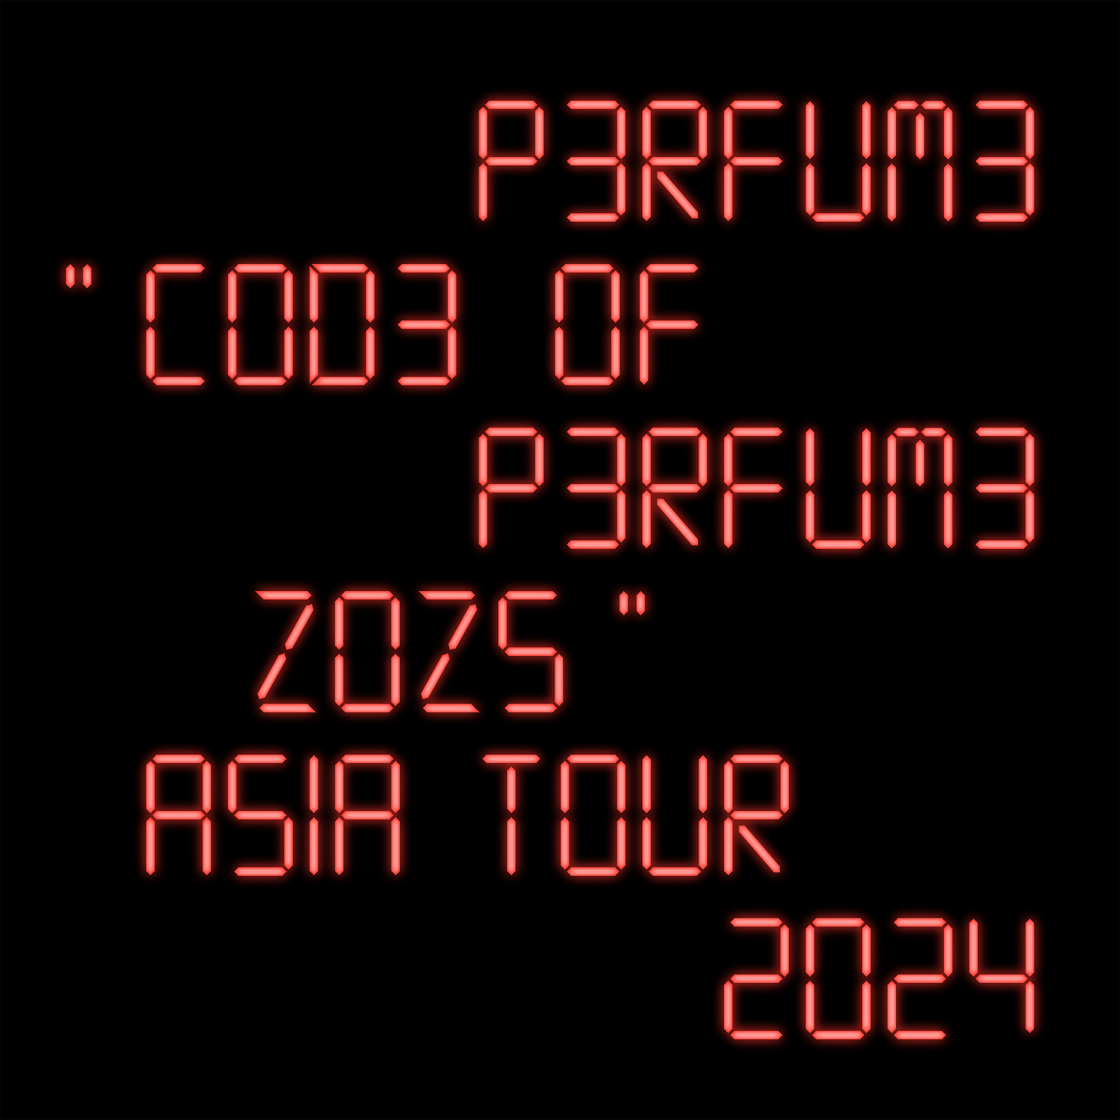 Perfume "COD 3 OF P 3 RFUM 3 ZOZ 5" Asia Tour 2024 特設サイト